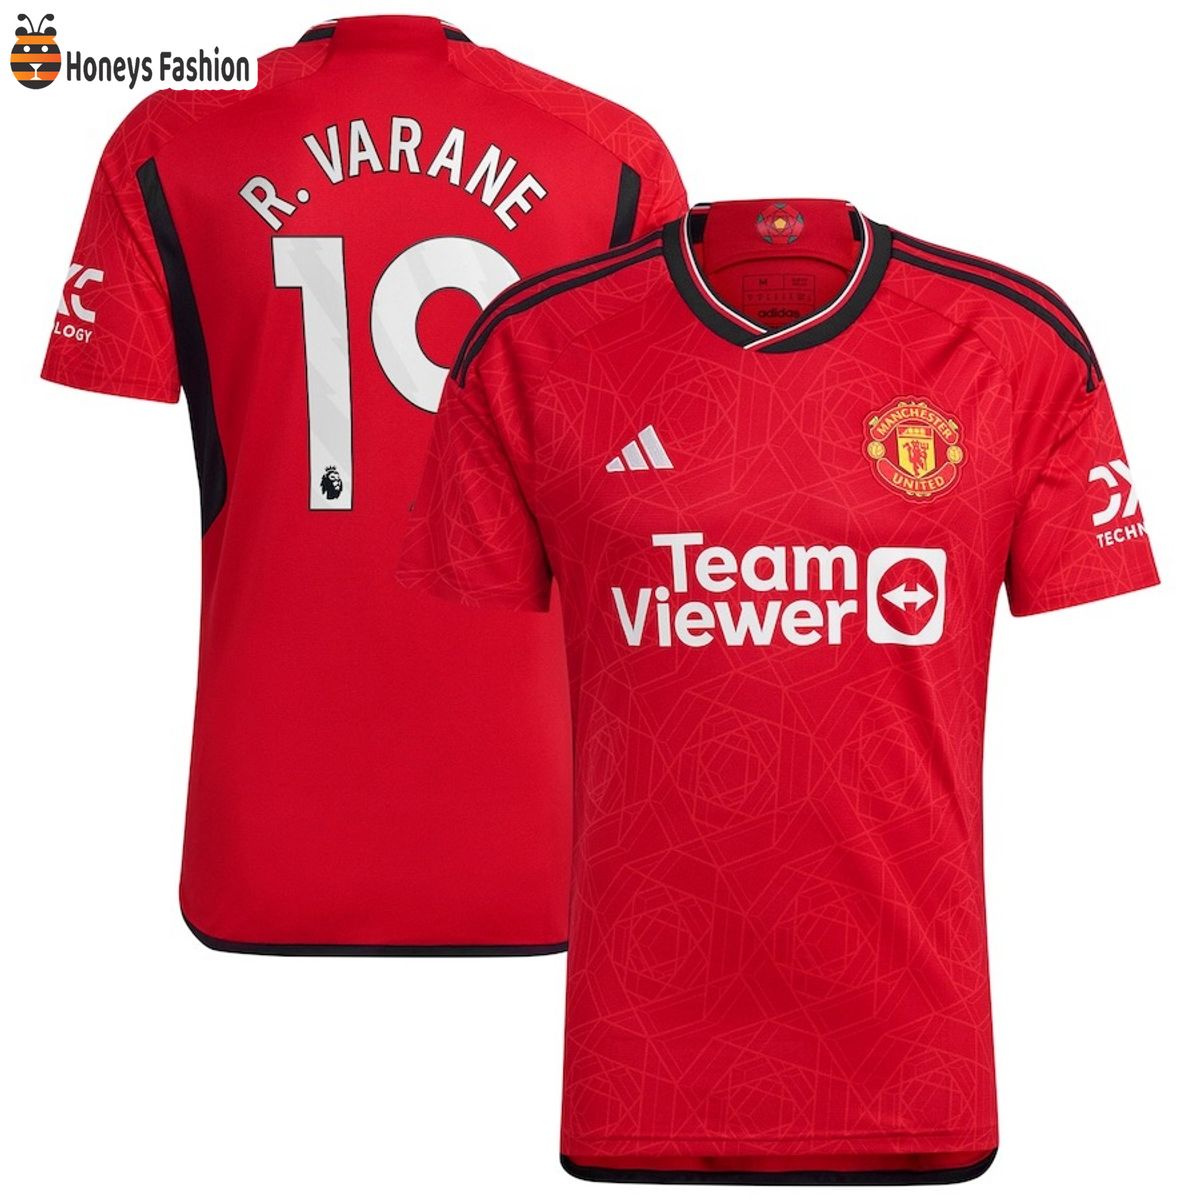 R. Varane 19 Manchester United Premier League 23-24 Jersey